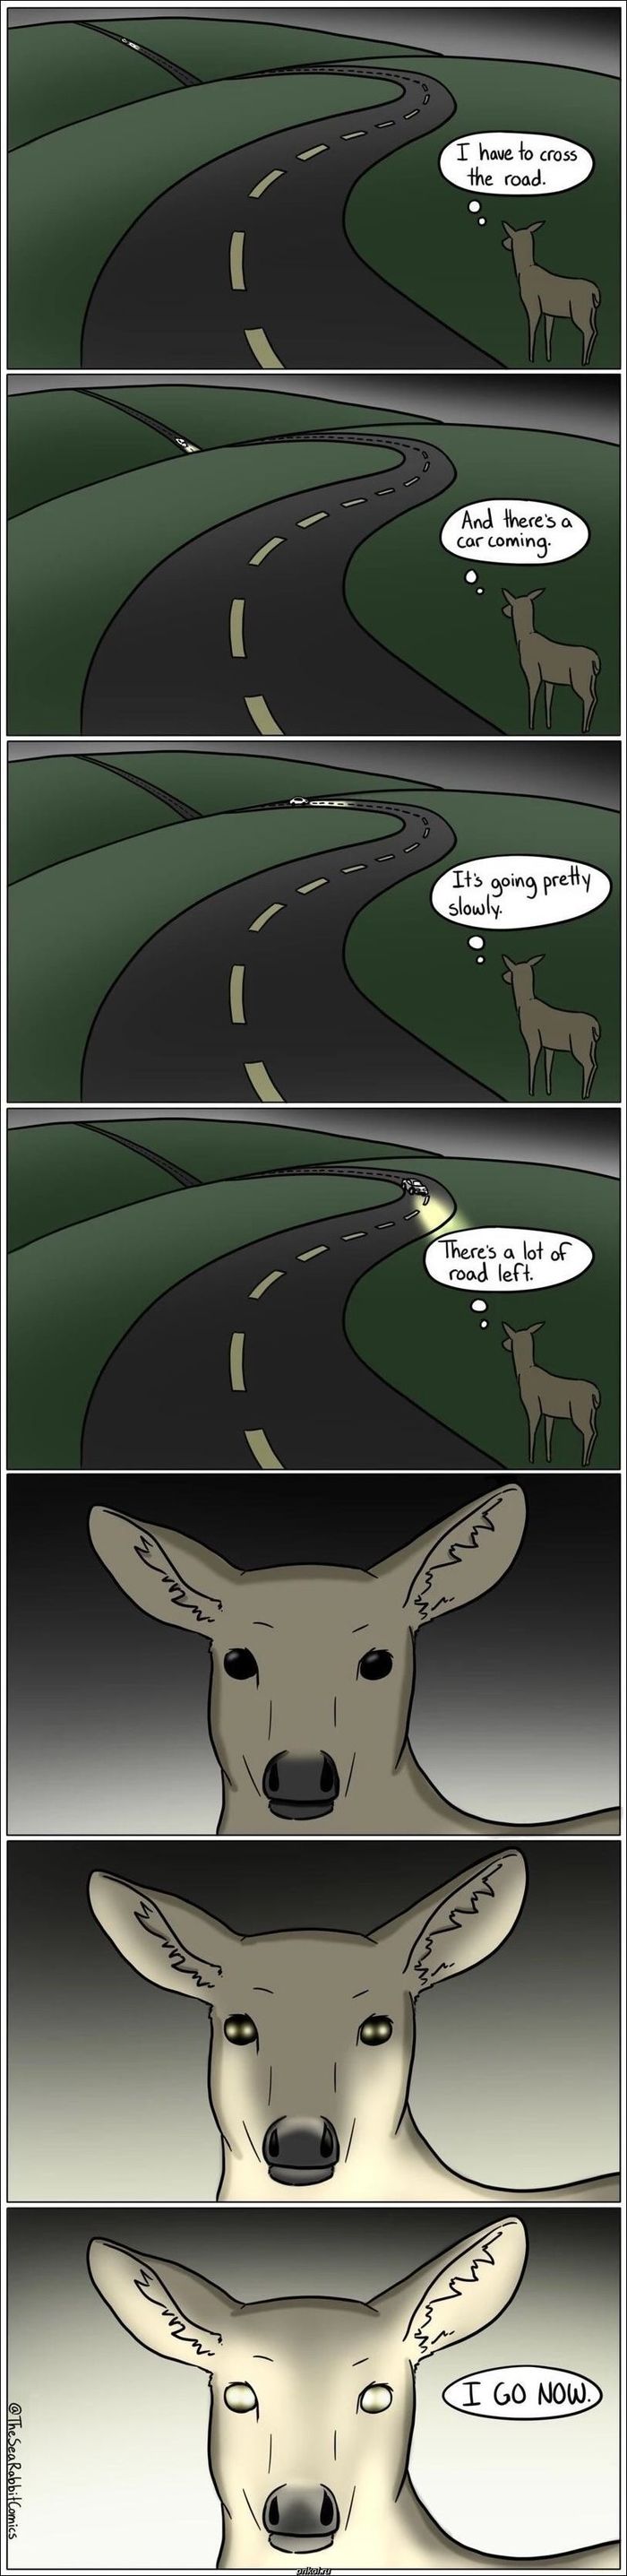 smart deer) - Deer, Road, Car, Clear kid, Longpost, Comics